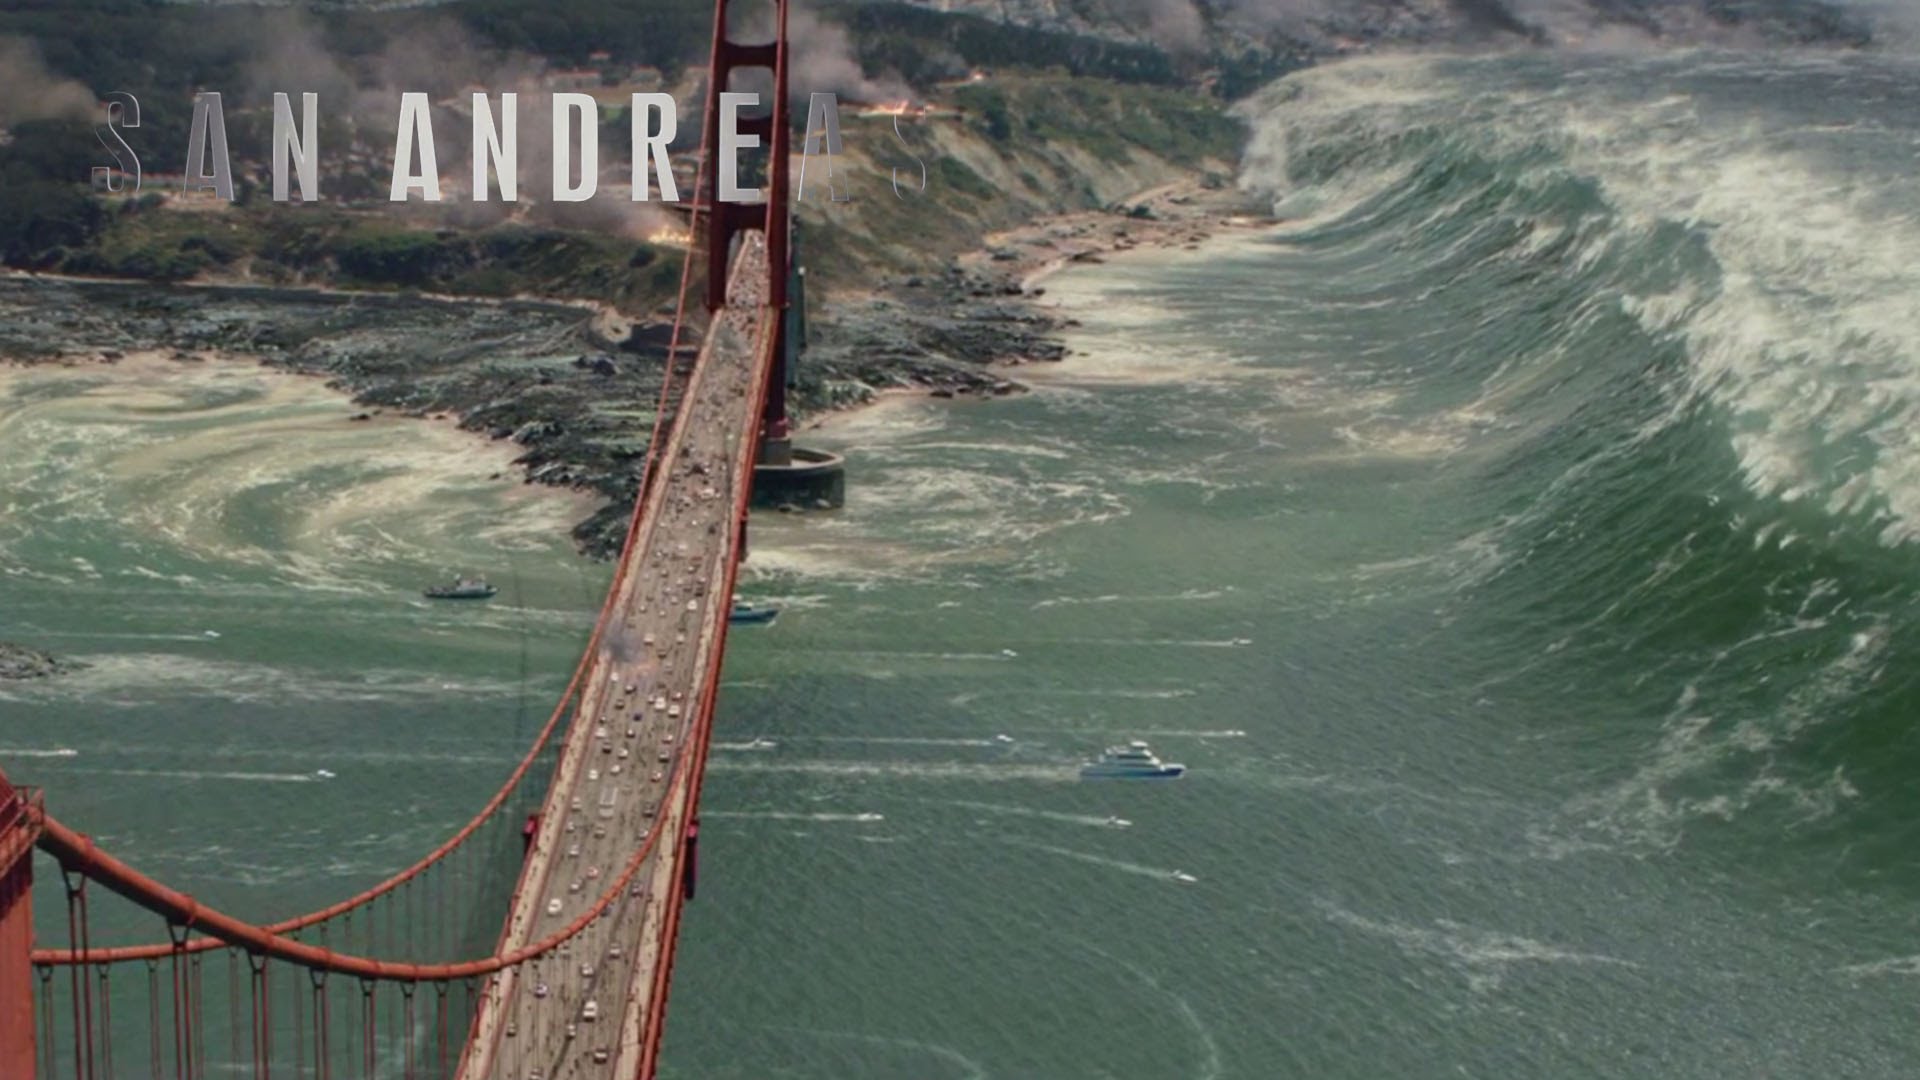 San Andreas Movie Images Wallpaper Widescreen #5d1304 - Ehiyo.com